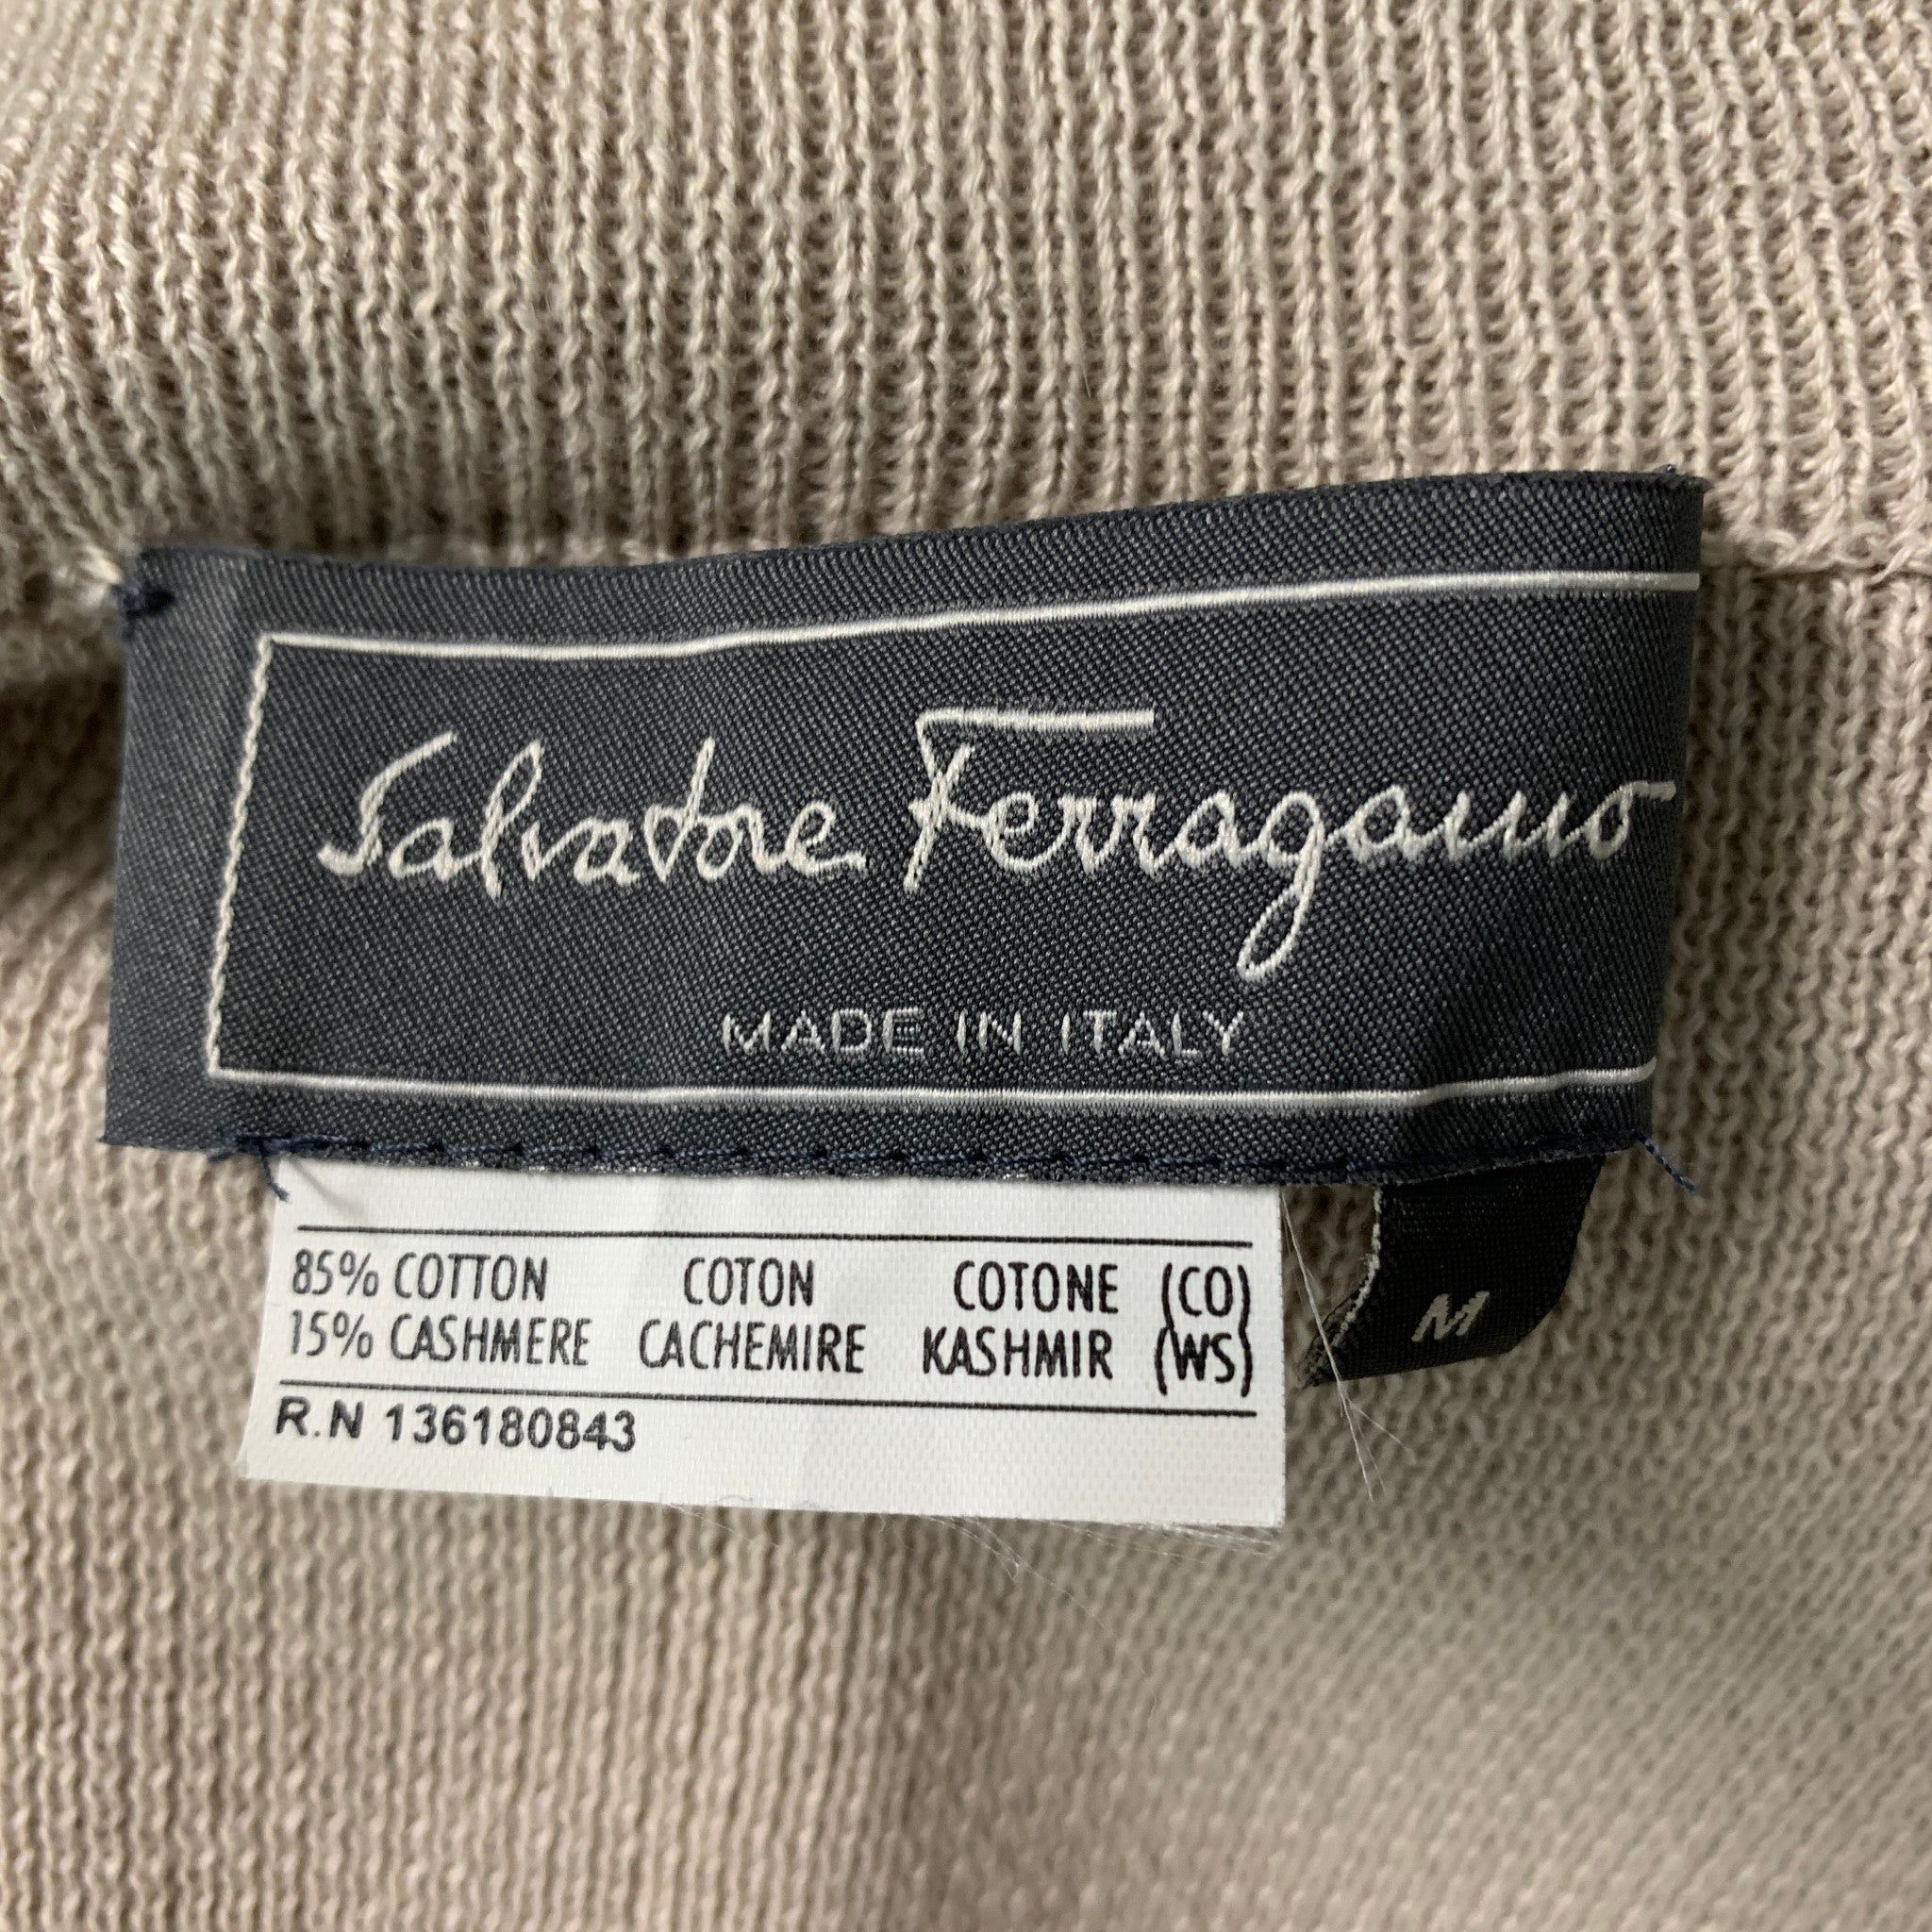 Salvatore Ferragamo Oatmeal Knitted Cotton & Cashmere Jacket Size US M / EU 48-50 / 2 - 5 Thumbnail